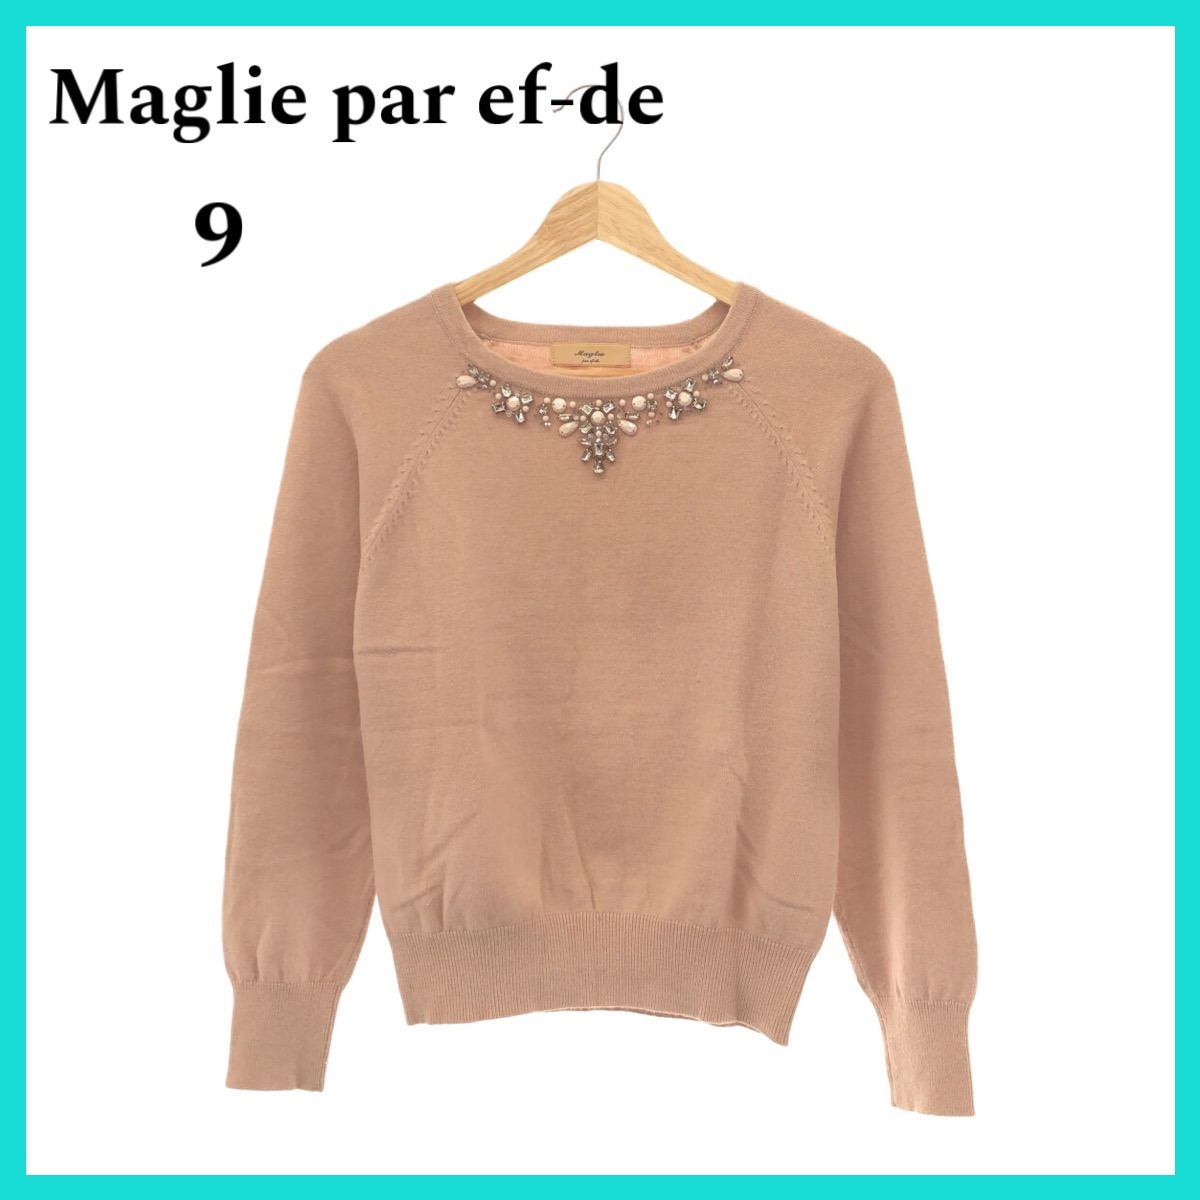 Maglie par ef-de マーリエパーエフデ トップス ニット セーター